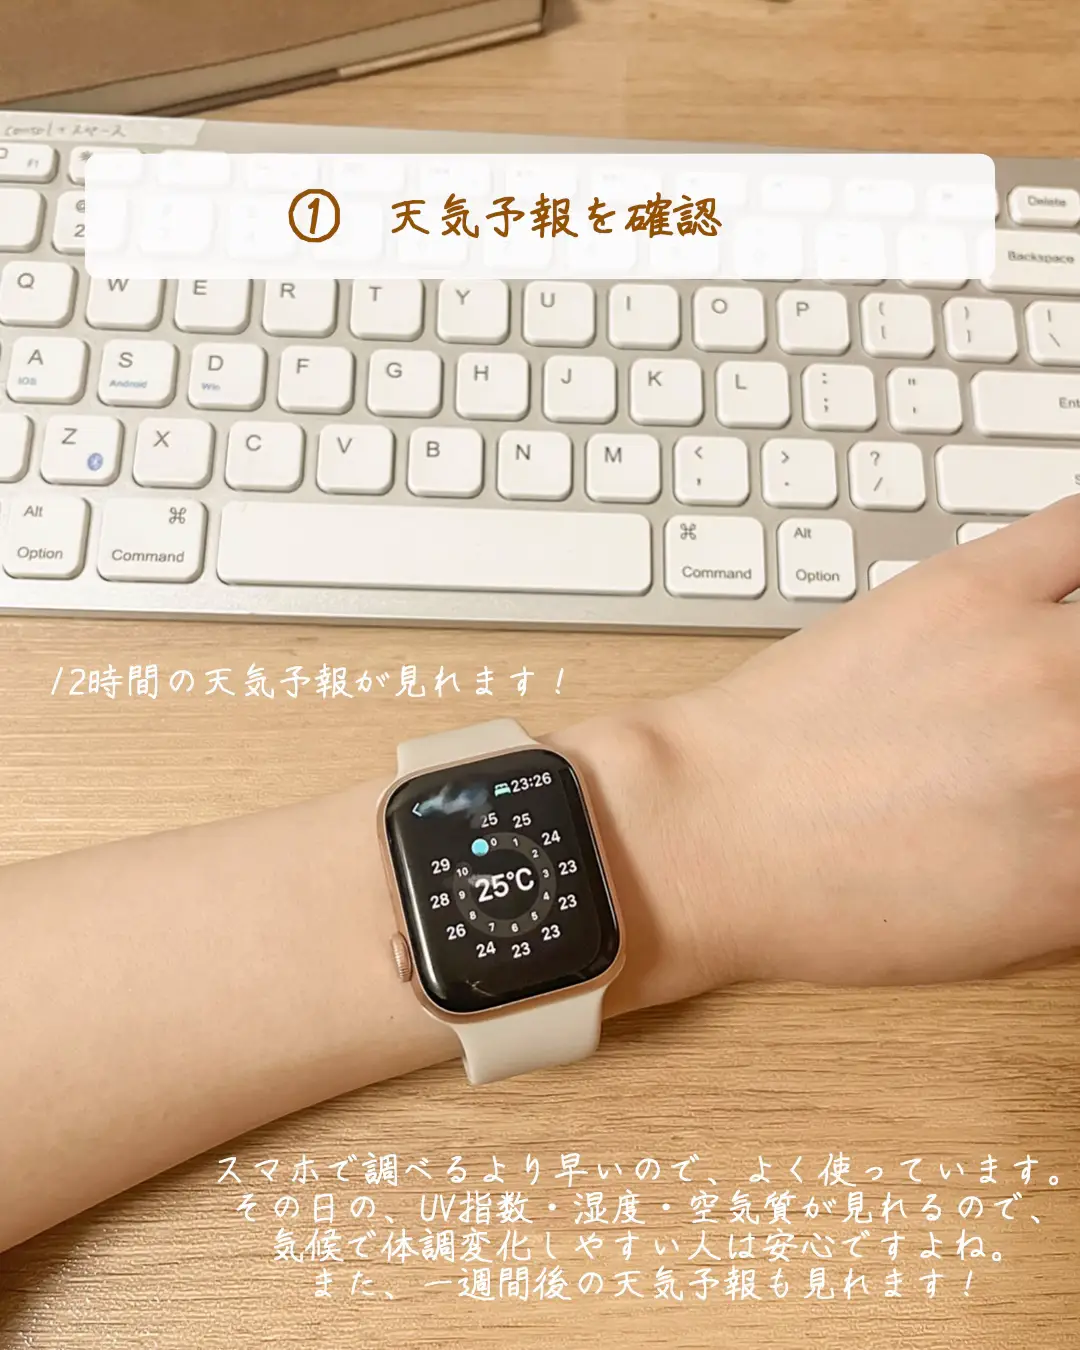 Apple Watch 心拍数 - Lemon8検索